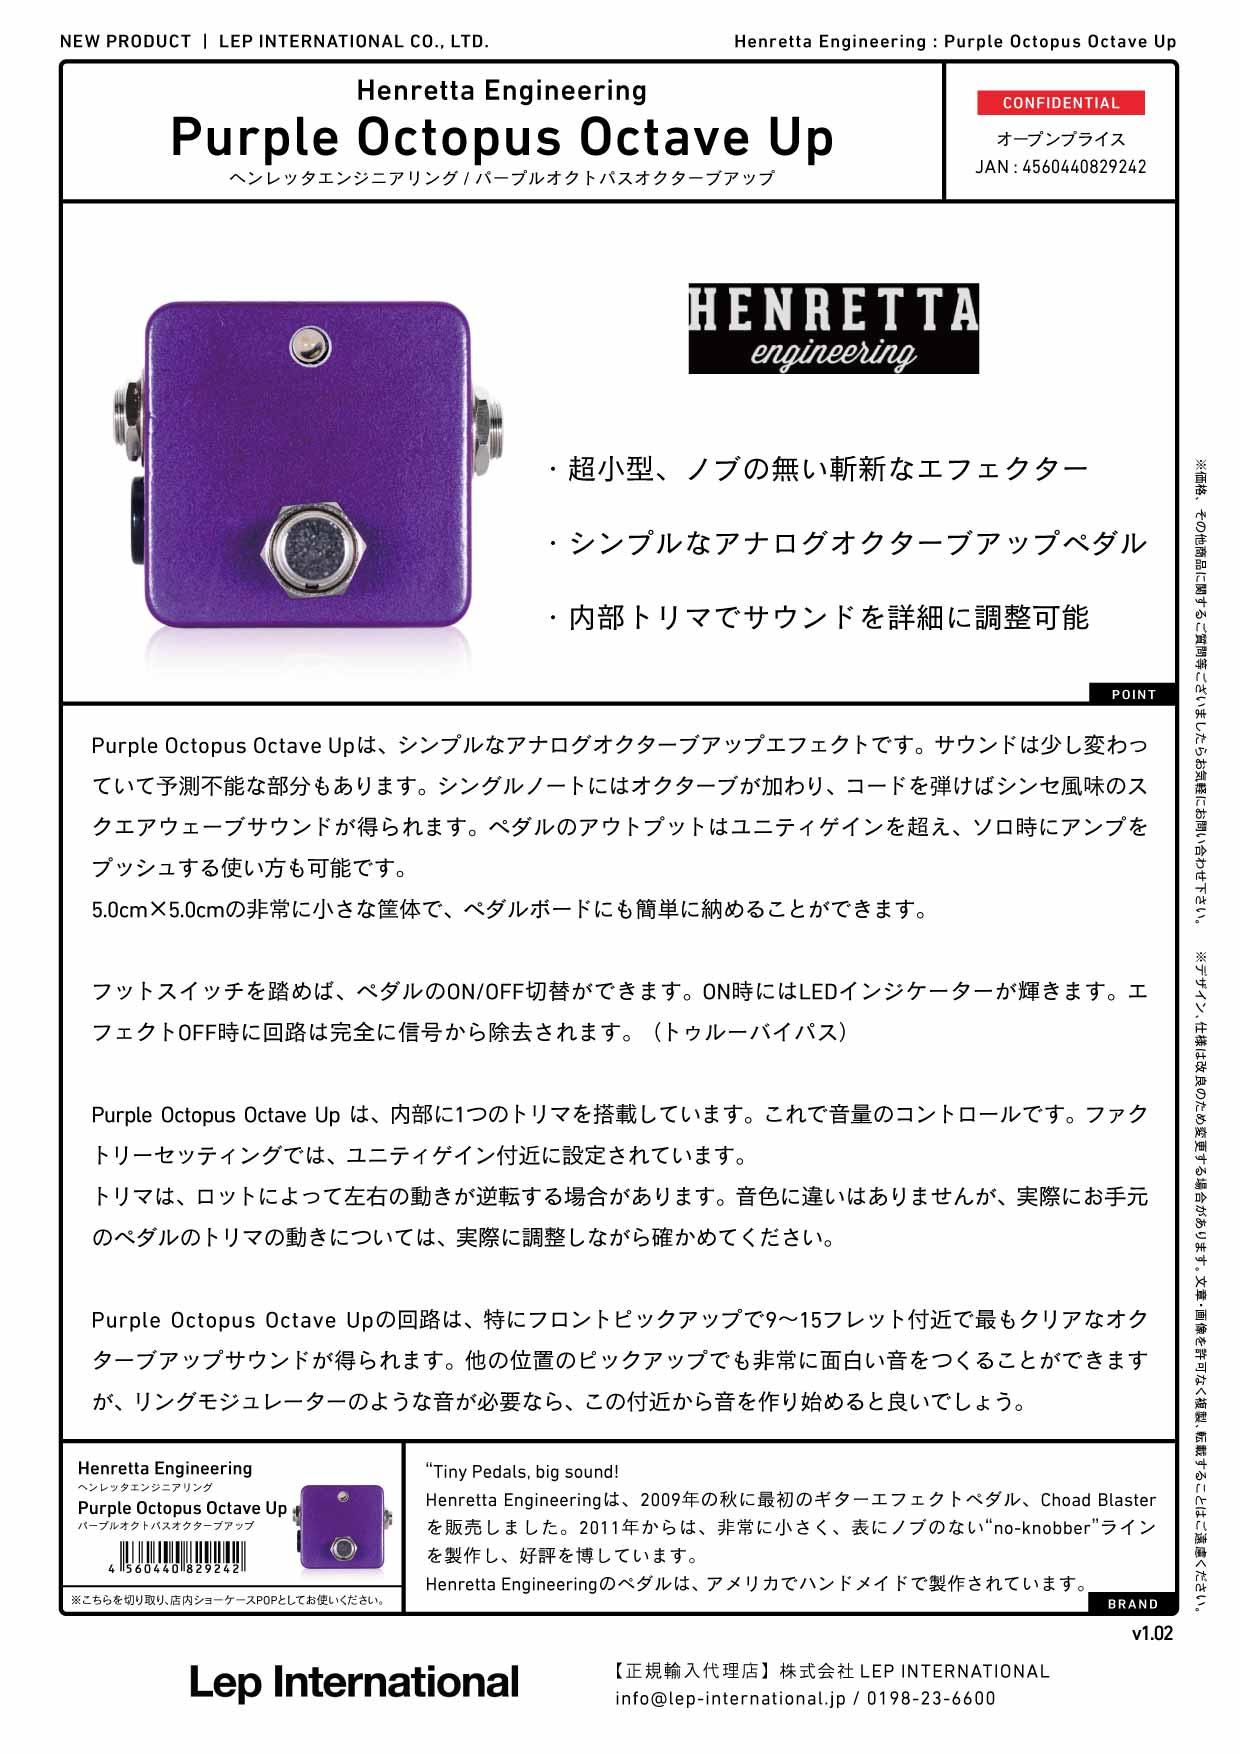 Henretta Engineering/Purple Octopus Octave Up